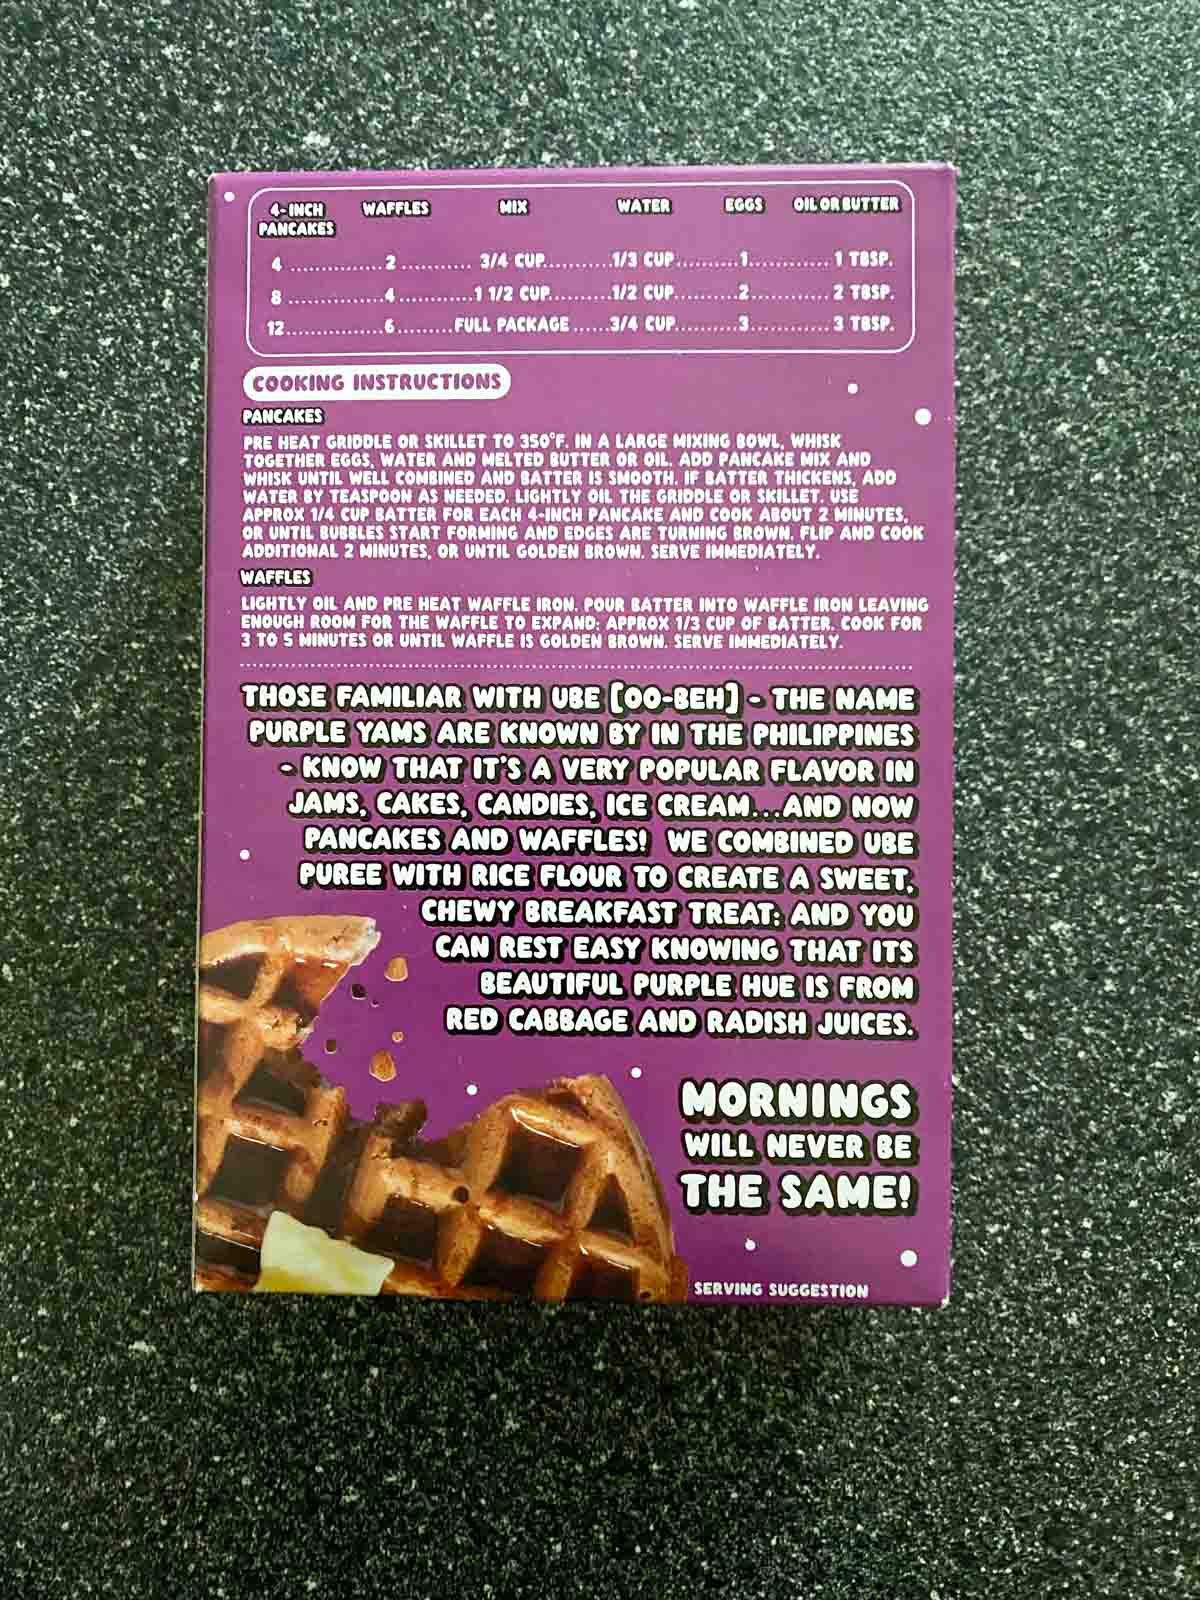 Ube Mochi pancake and waffle mix from Trader Joe's - back of box instructions